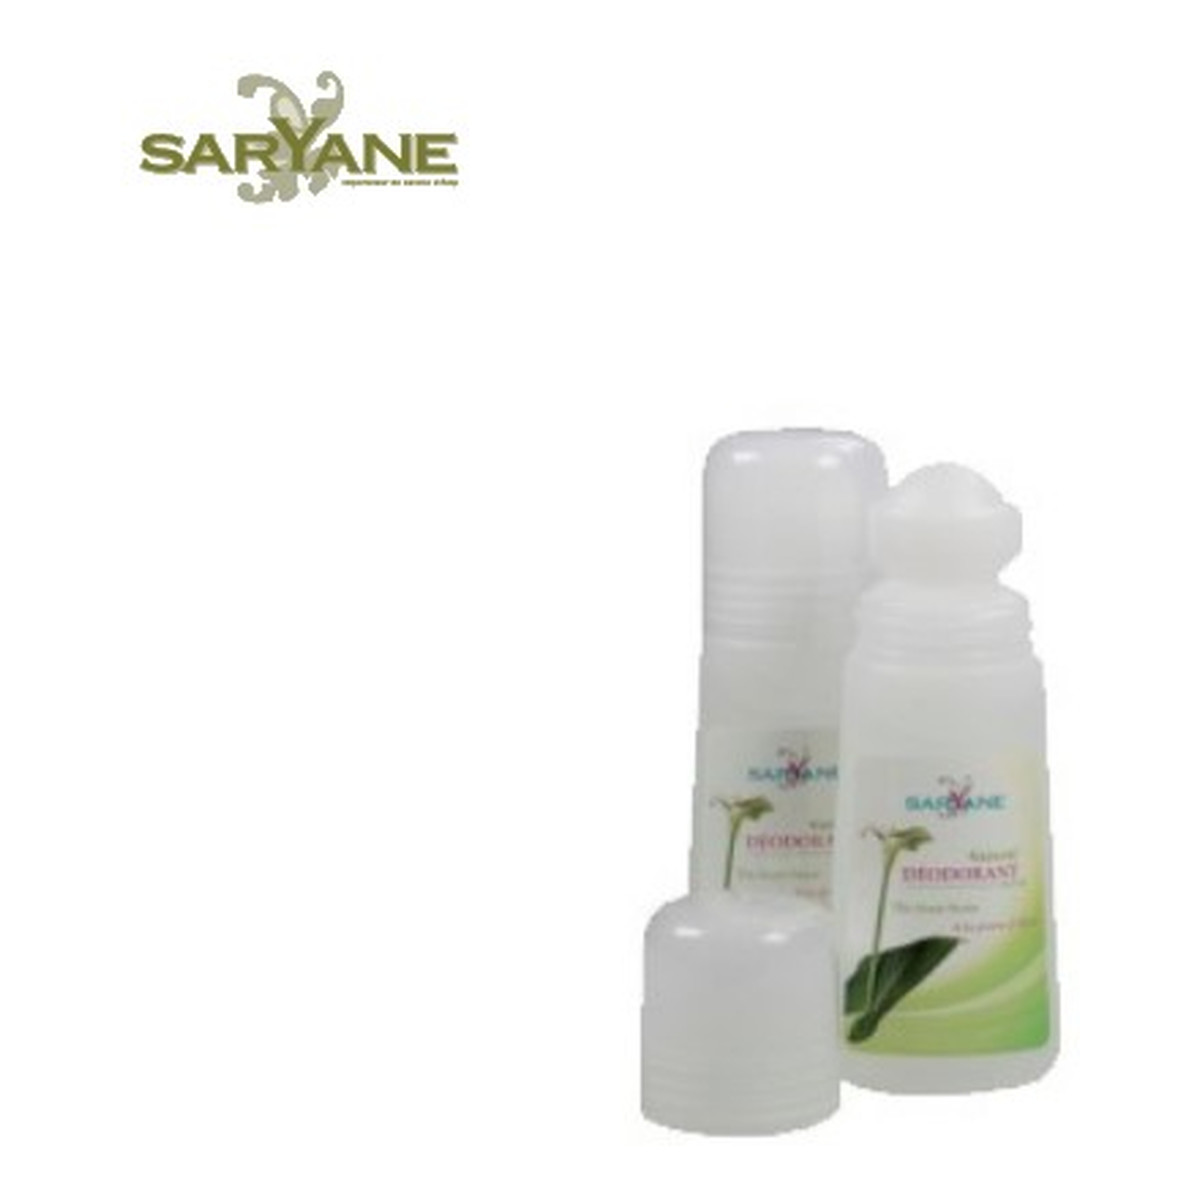 Saryane Naturalny antyperspirant - Ałun w kulce 65ml